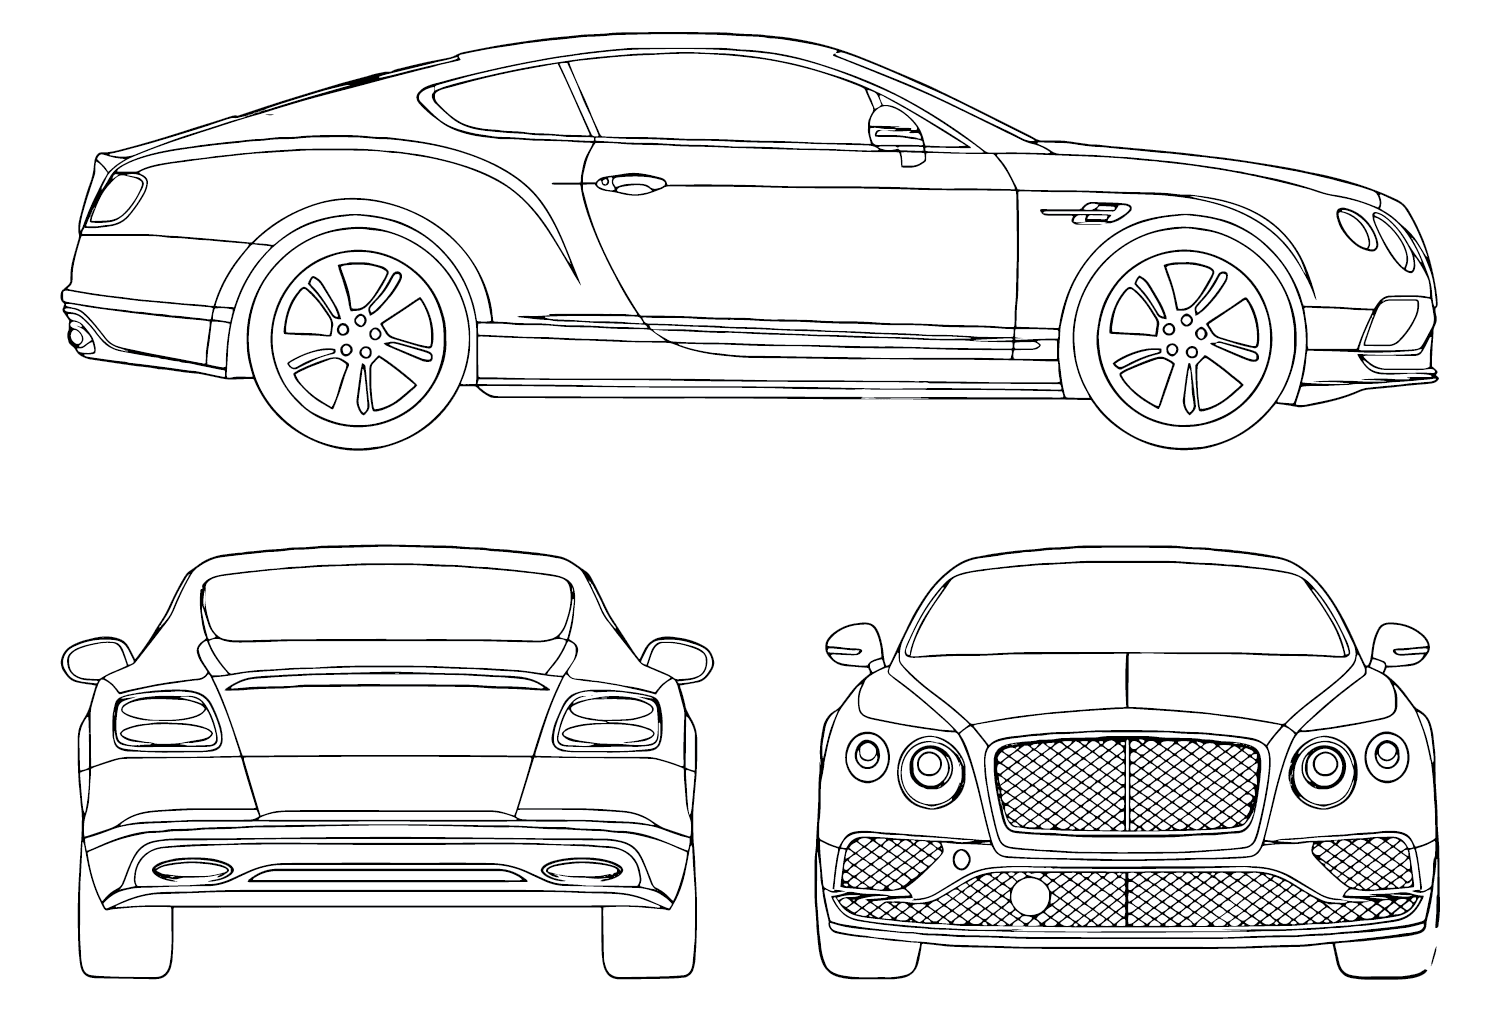 Bentley Premium Coupe Coloring Page